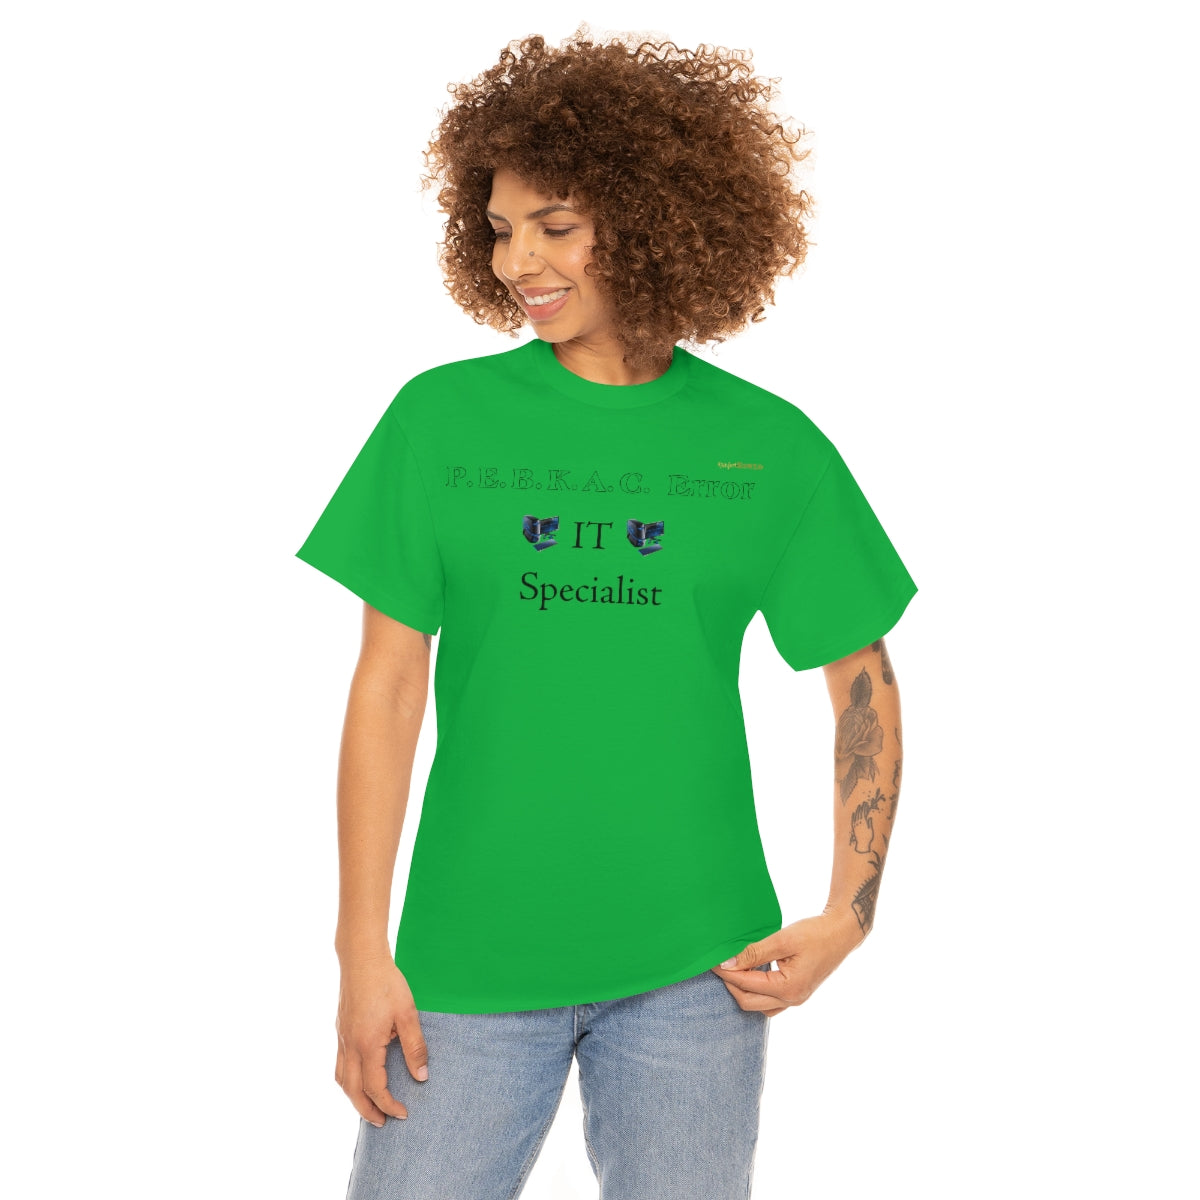 PEBKAC Error T-Shirt-2 (Tech Lovers Black Letters)